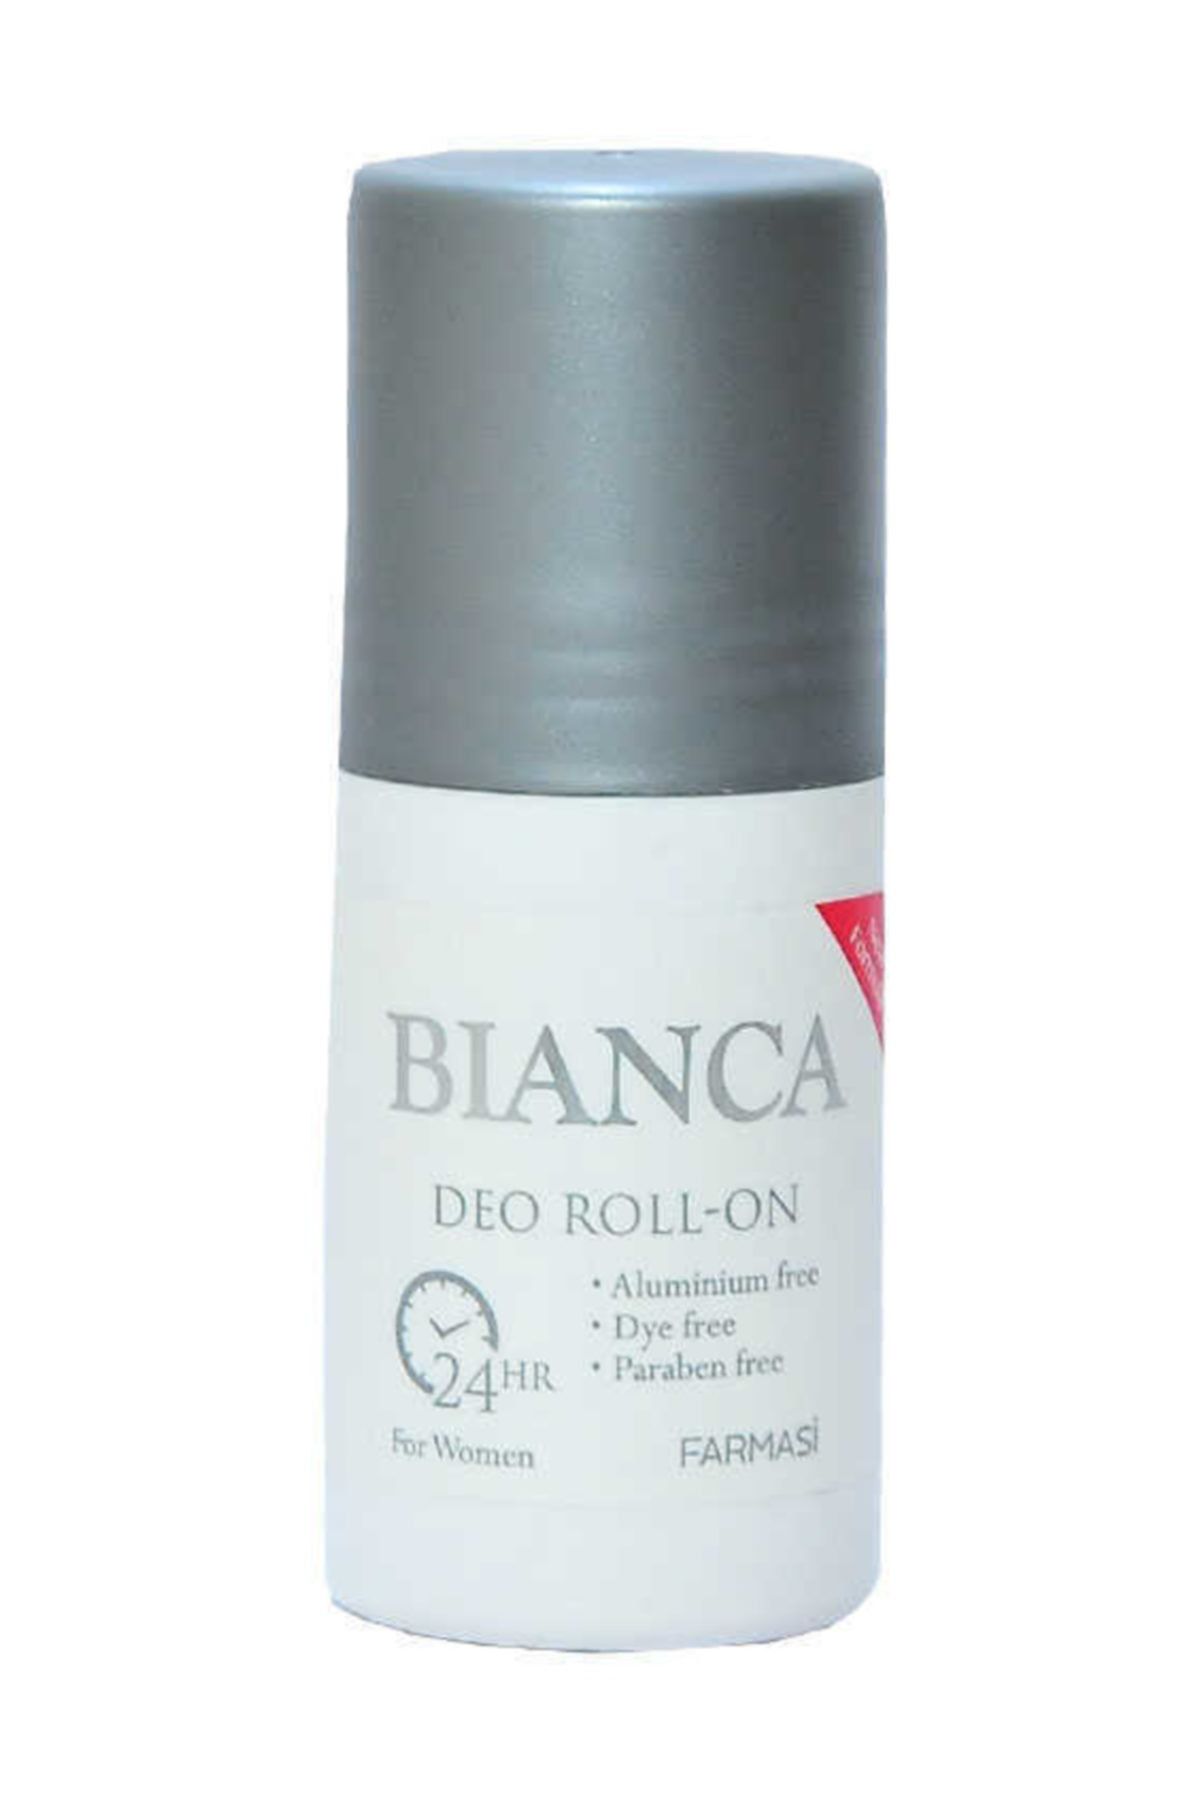 Farmasi Bianca Deo Roll-On For Women - 50 ml